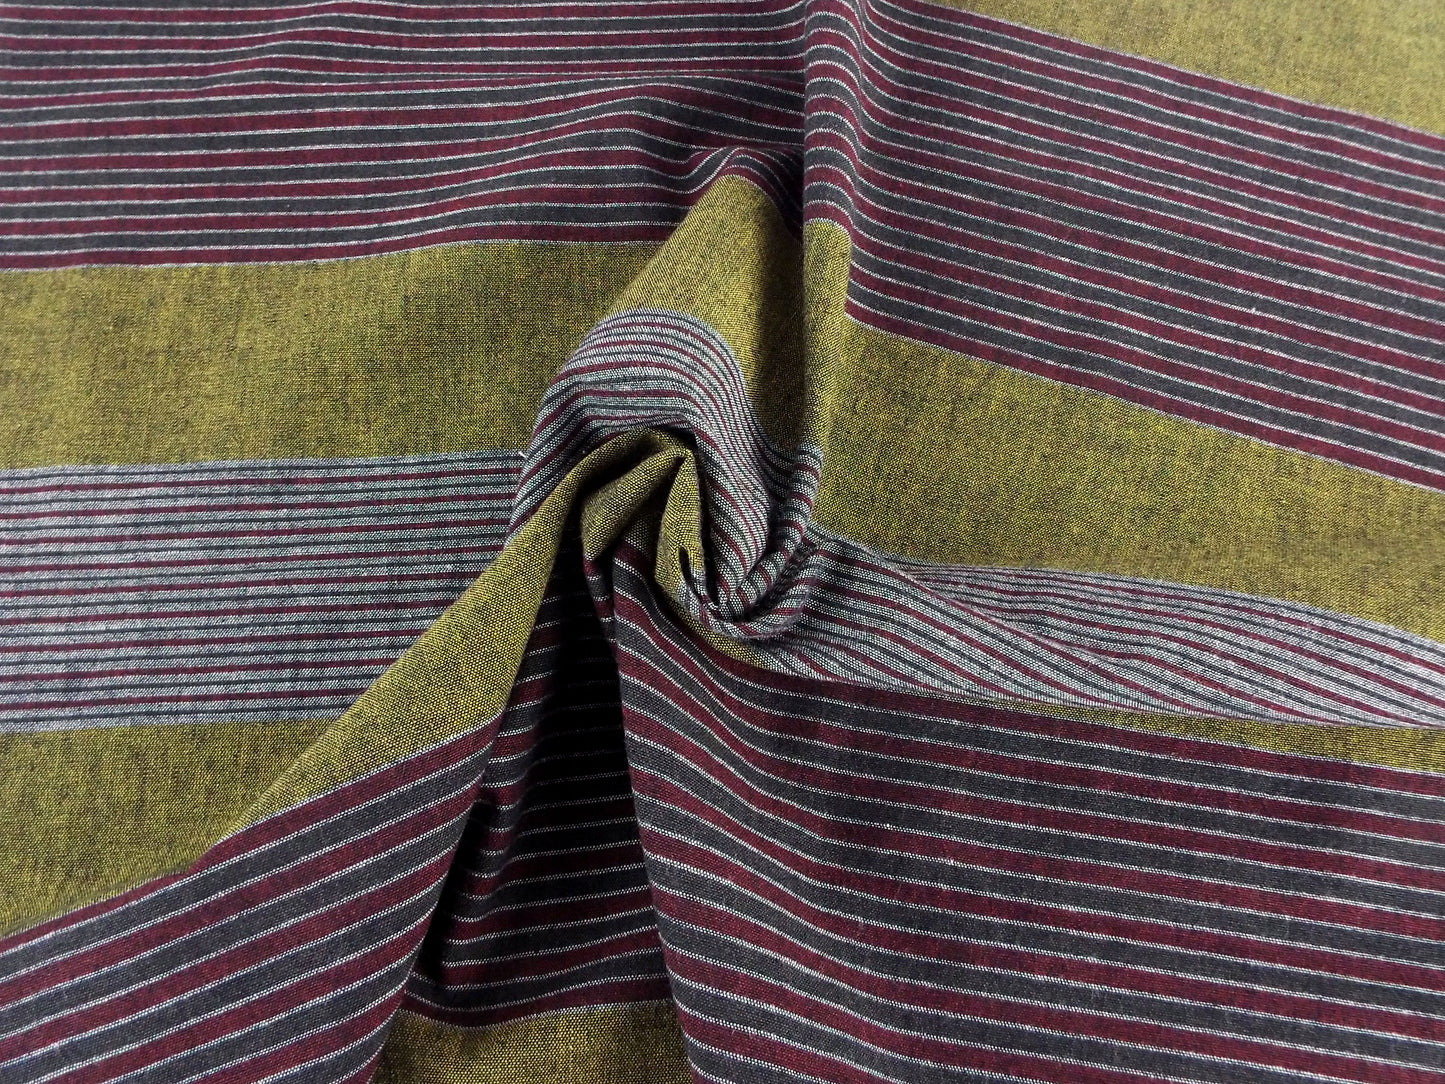 Kameda striped cotton fabric thin fabric # 107 AB 2 patterns